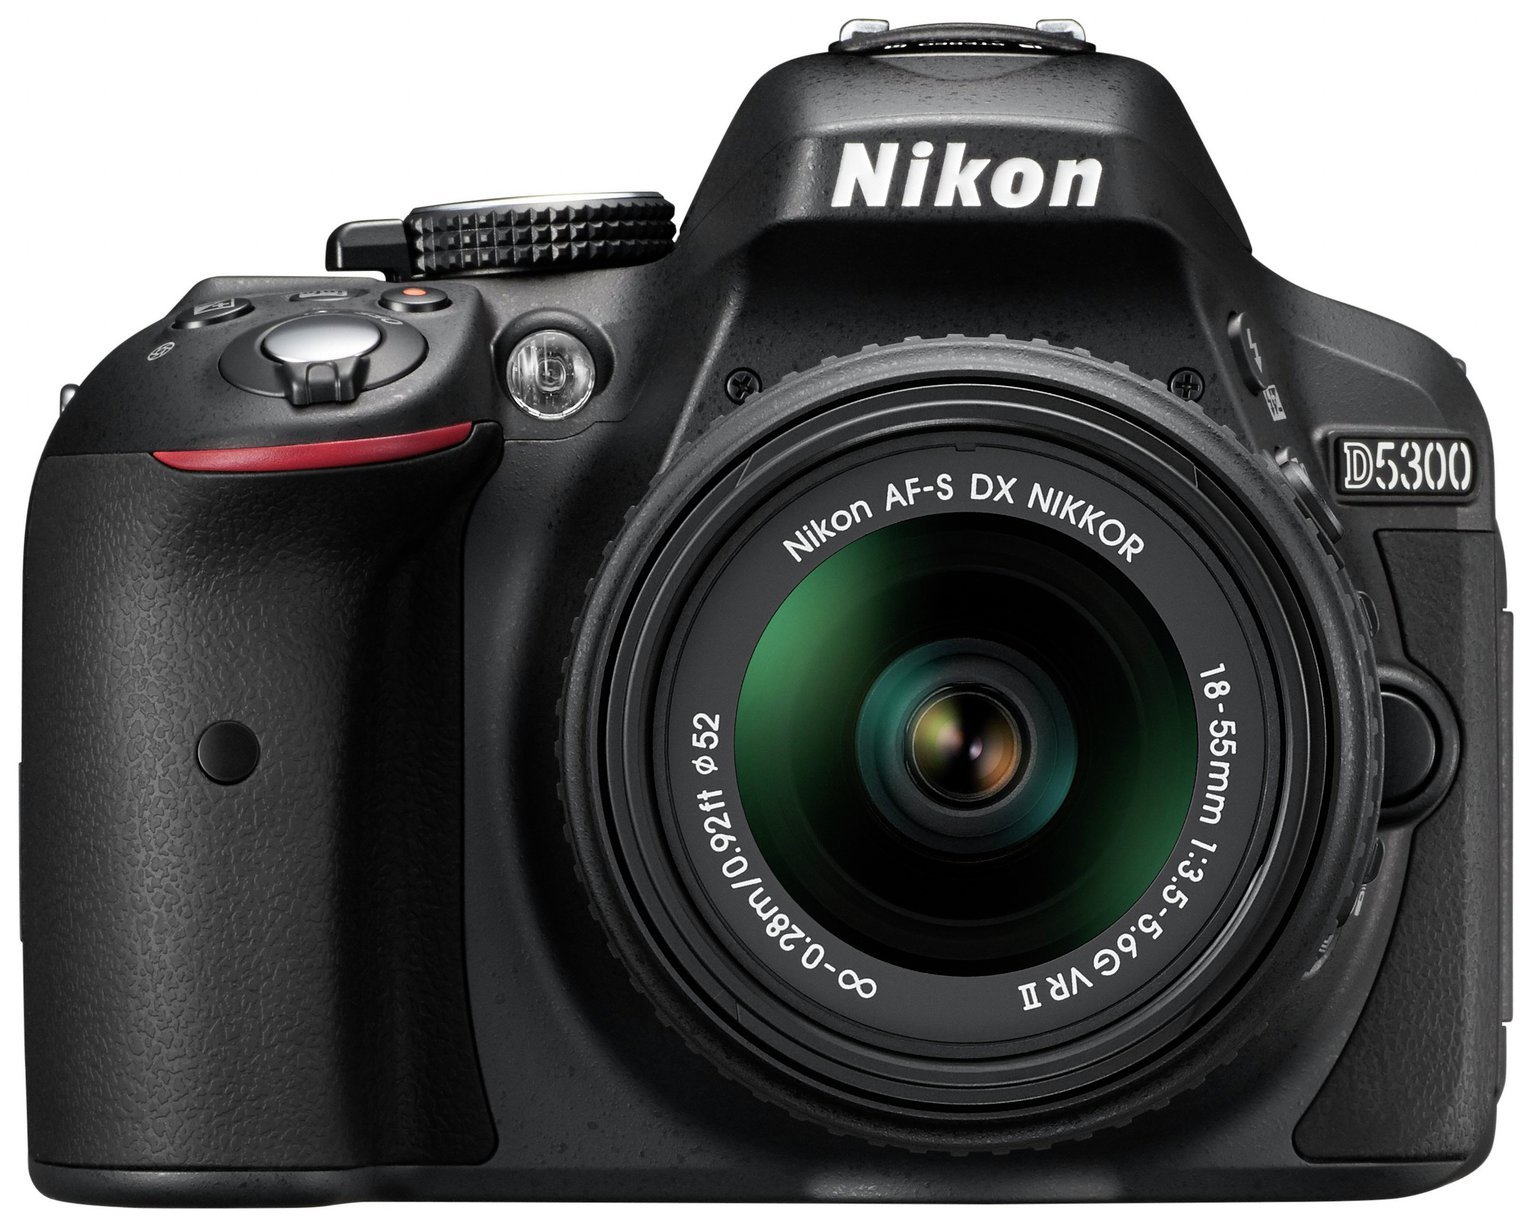 Nikon D5300 DSLR Camera with 18-55mm VR Lens review